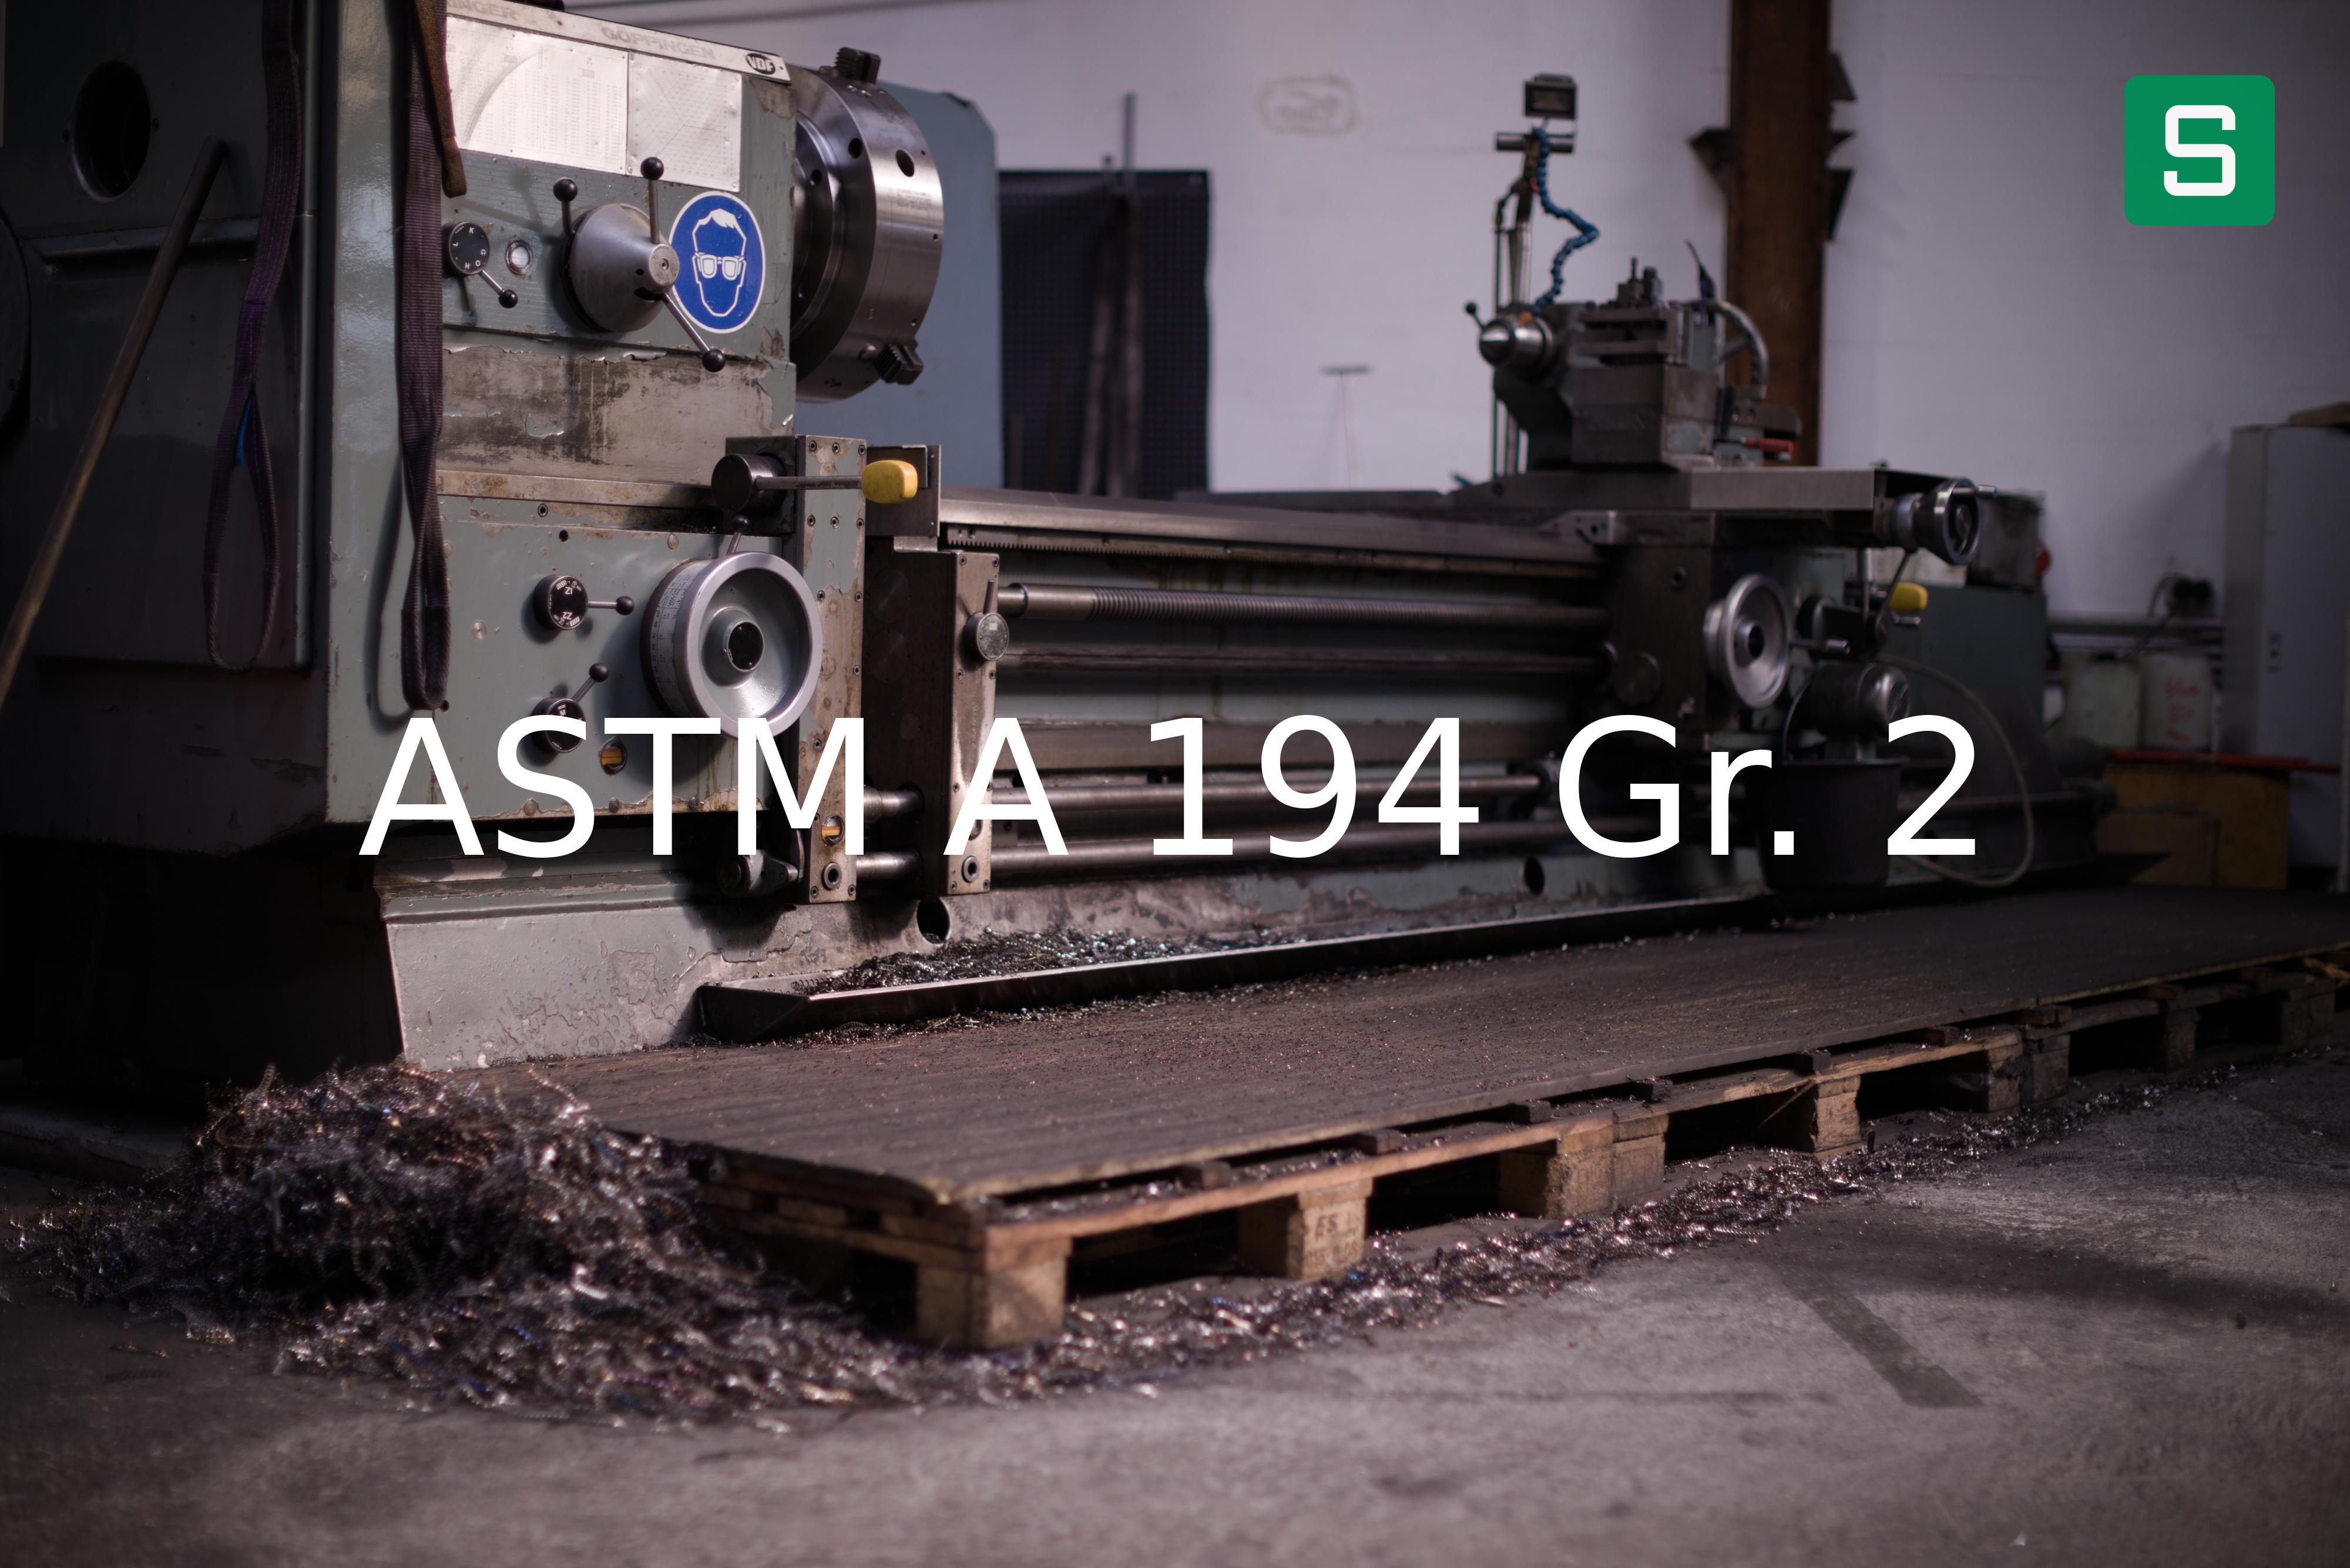 Steel Material: ASTM A 194 Gr. 2